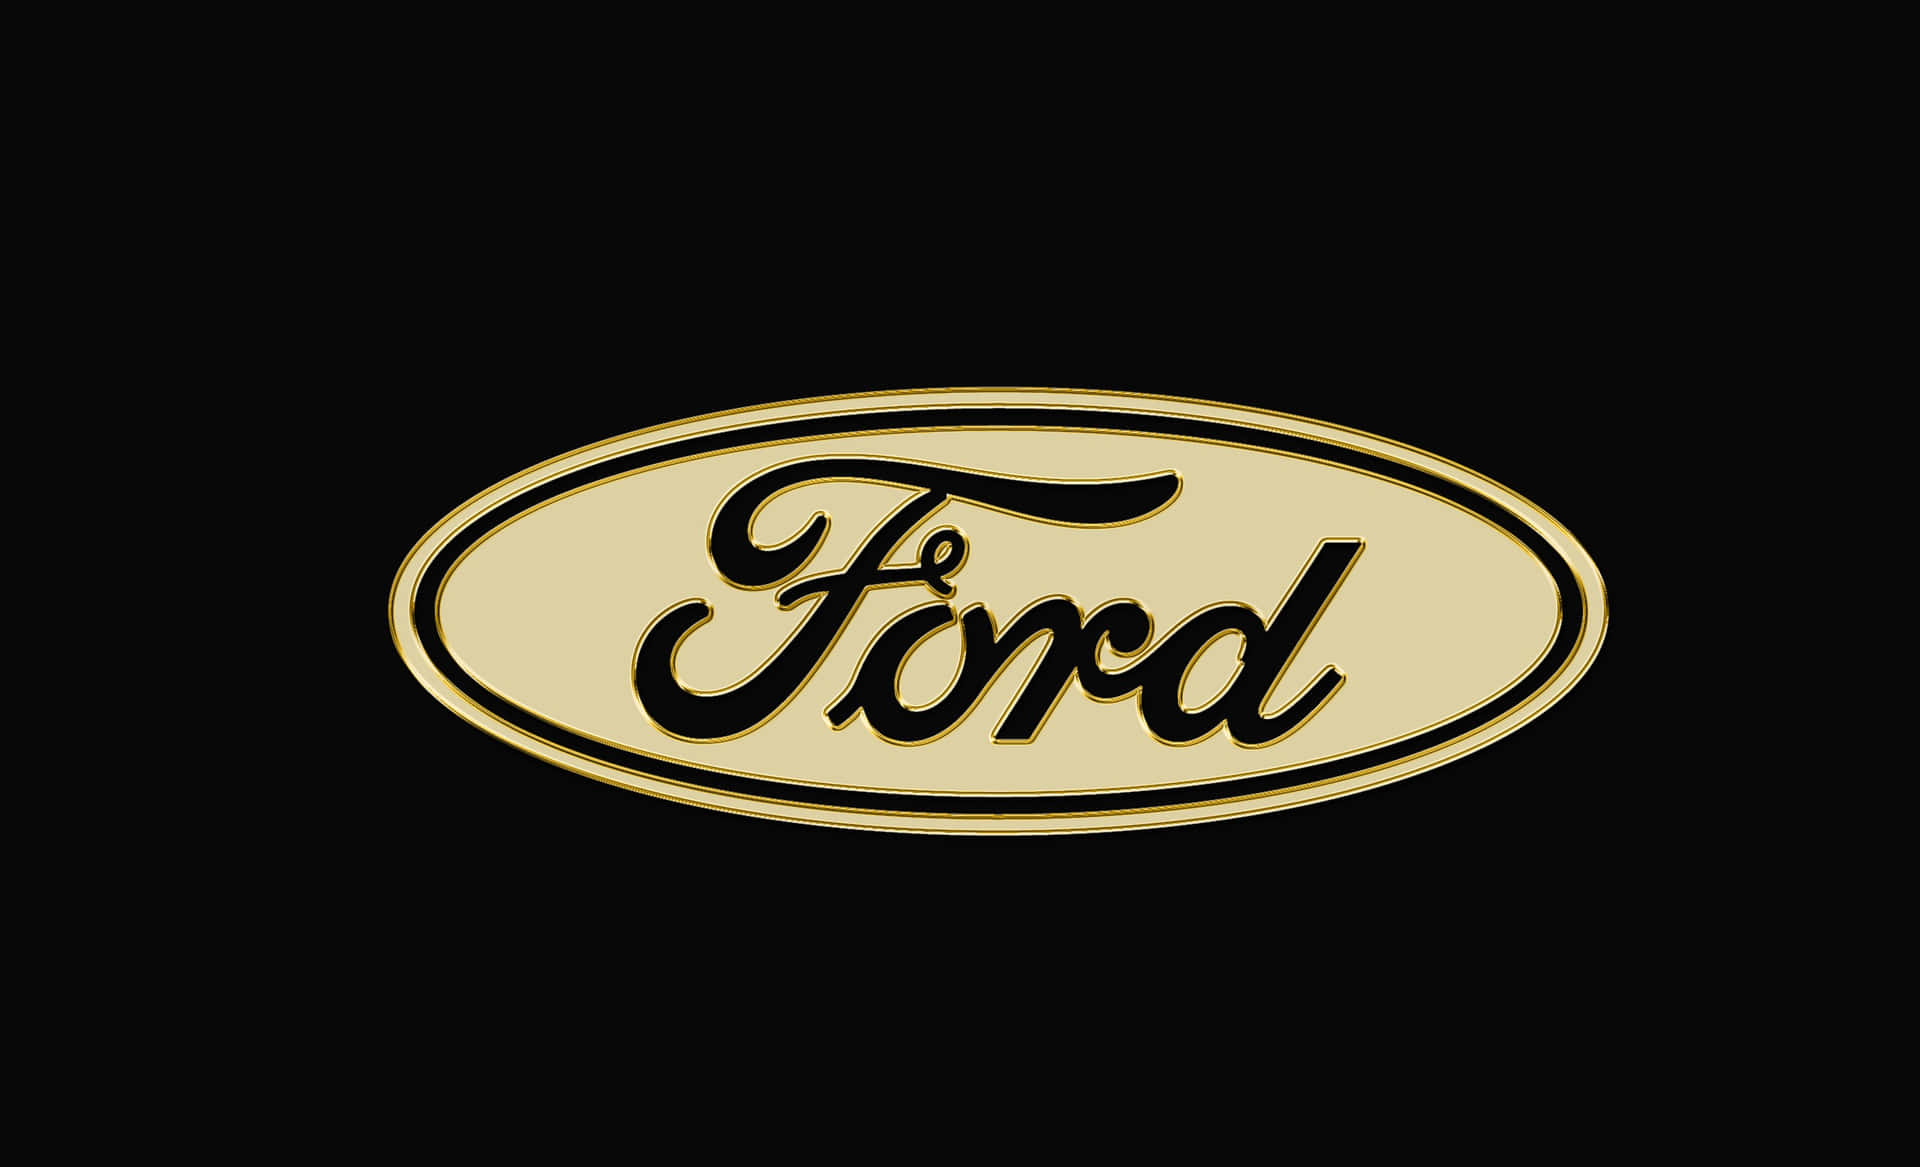 Unlogotipo De Ford Bien Iluminado Brillando Intensamente Sobre Un Fondo Oscuro. Fondo de pantalla